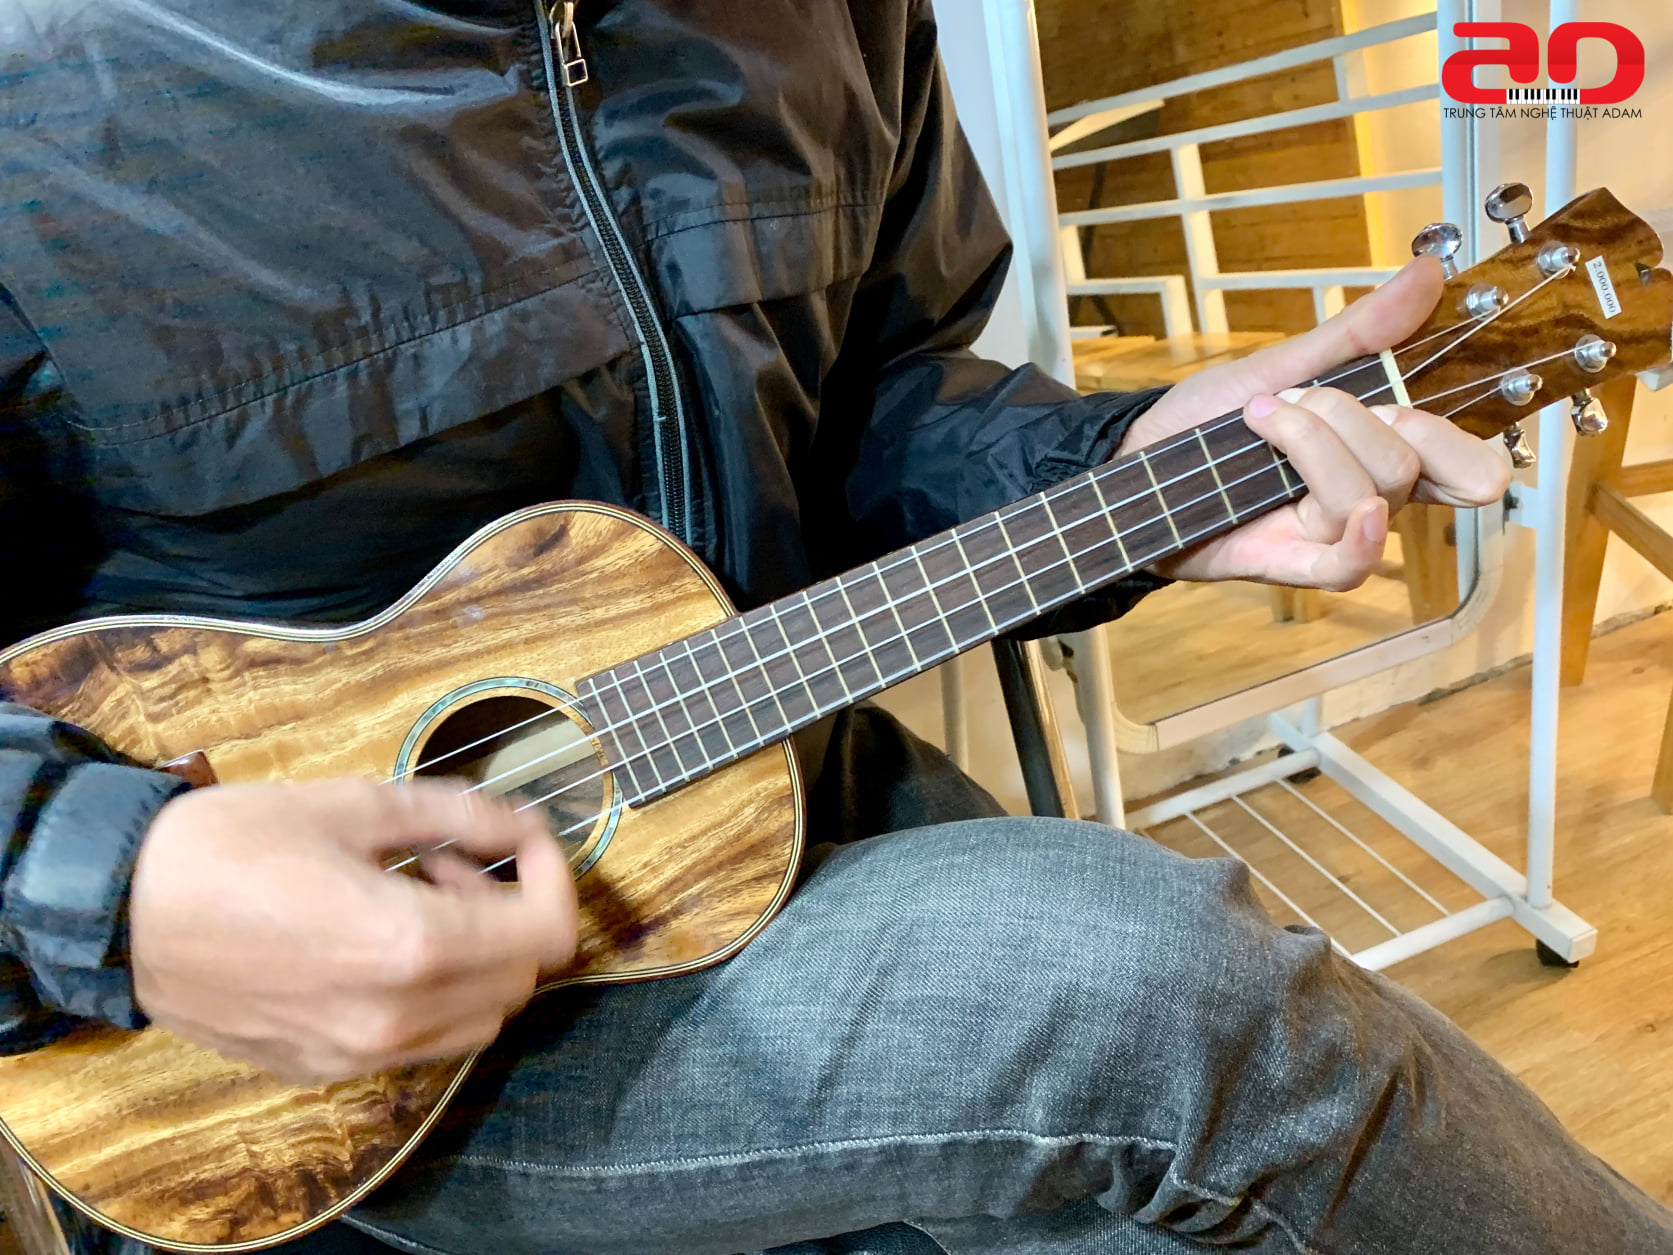 dạy học ukulele từ cơ bản đến nâng cao - ttnt ukulele